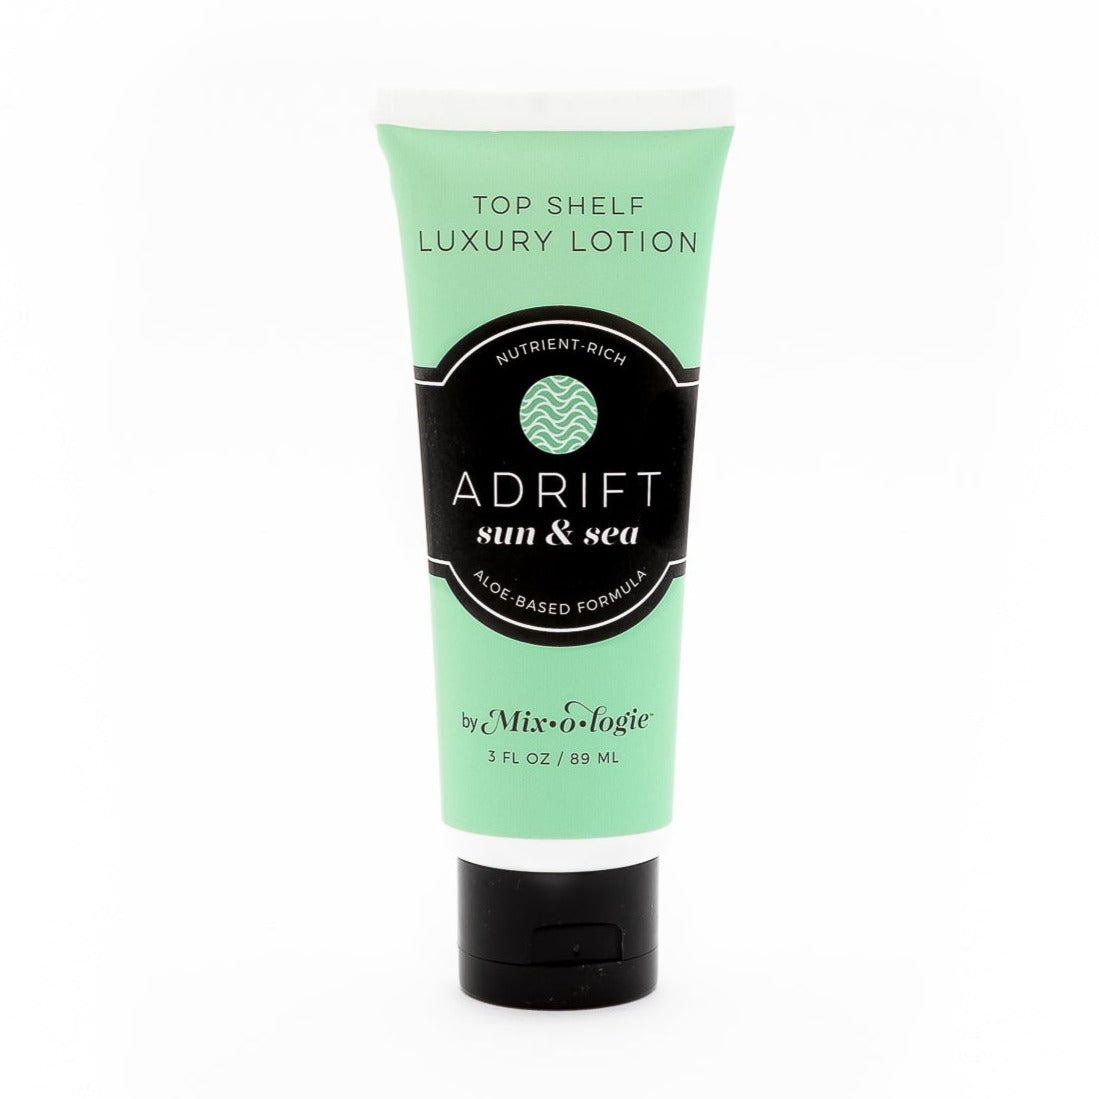 Adrift sun & sea aloe based formula top shelf luxury lotion in 3 FL oz tube. 